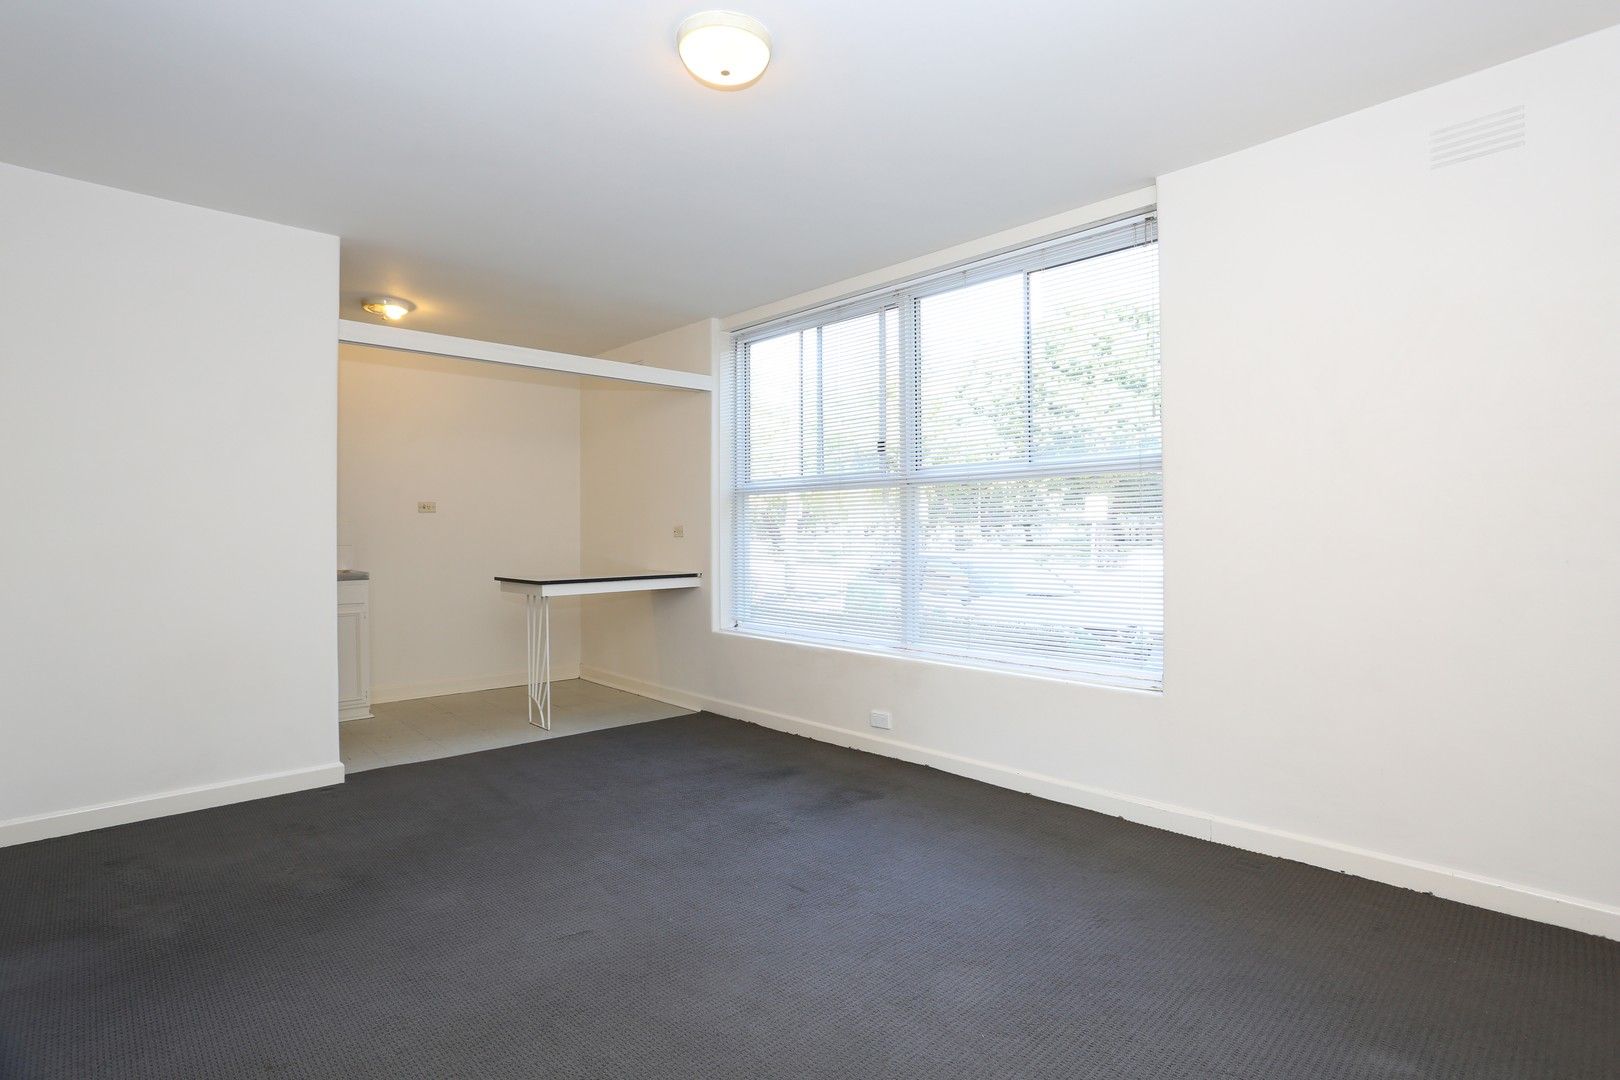 1 bedrooms Apartment / Unit / Flat in 2/26 Garton St CARLTON NORTH VIC, 3054